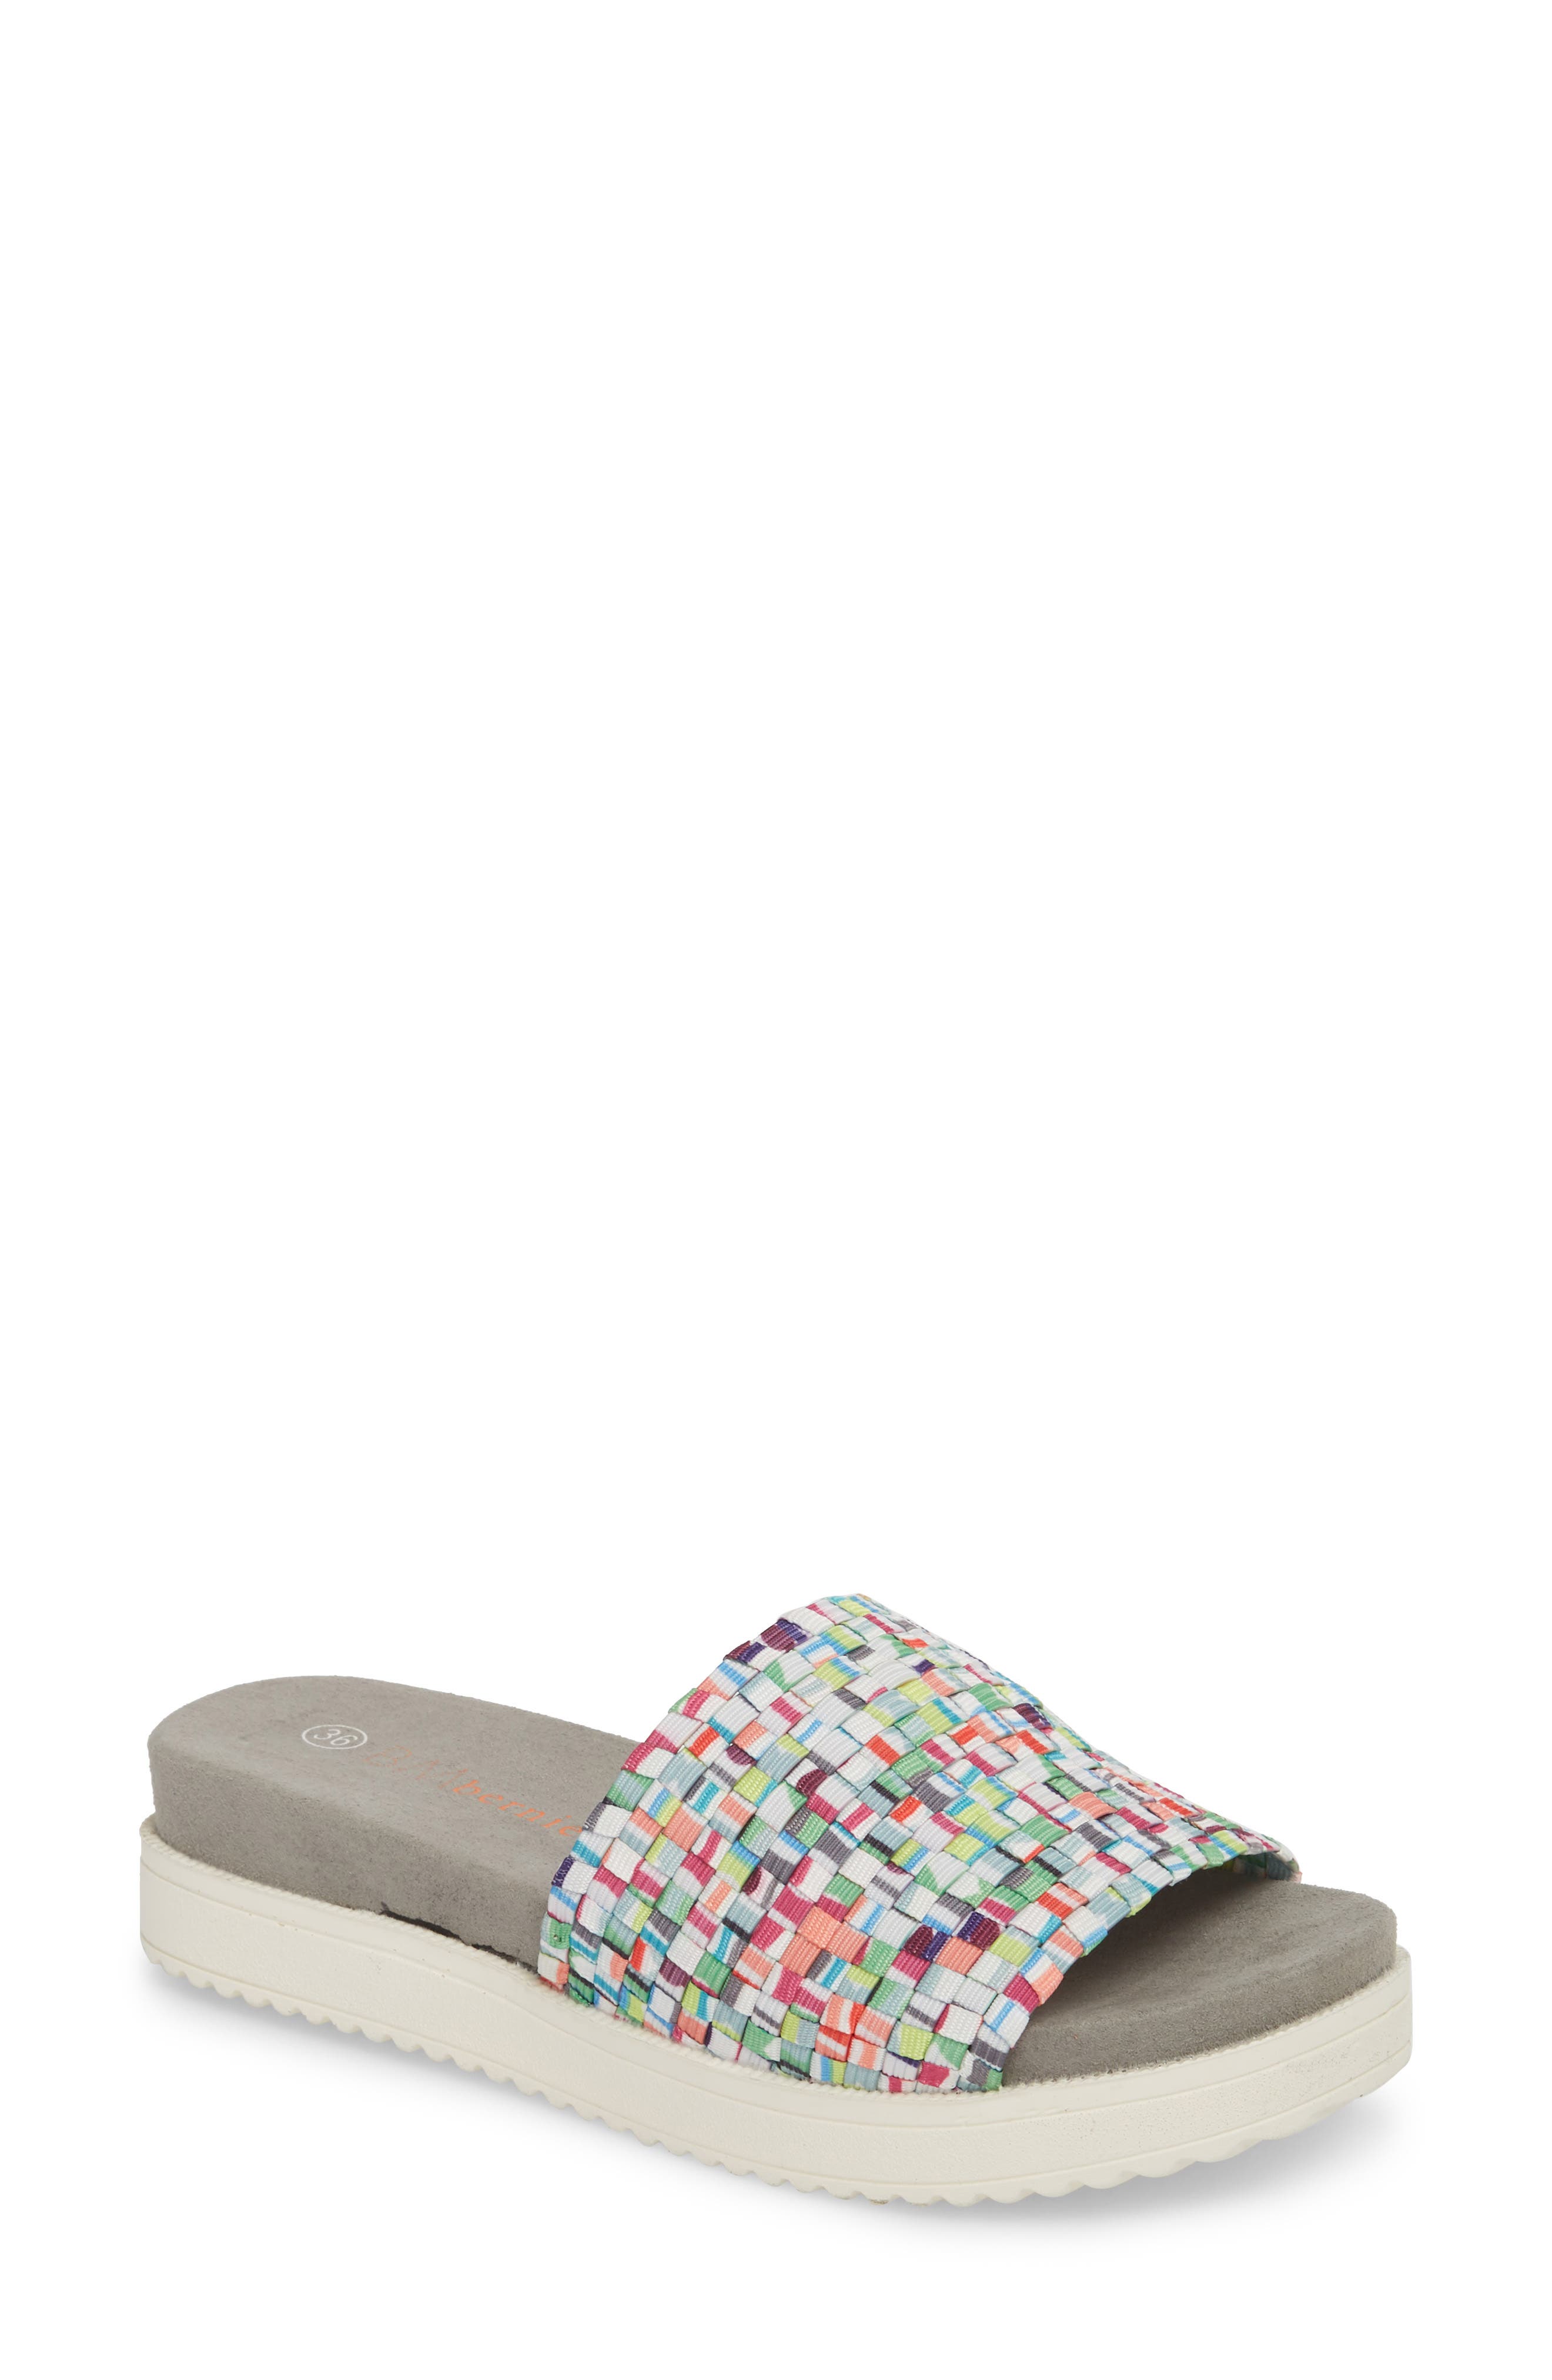 bernie mev. Capri Slide Sandal in Gumballs Fabric